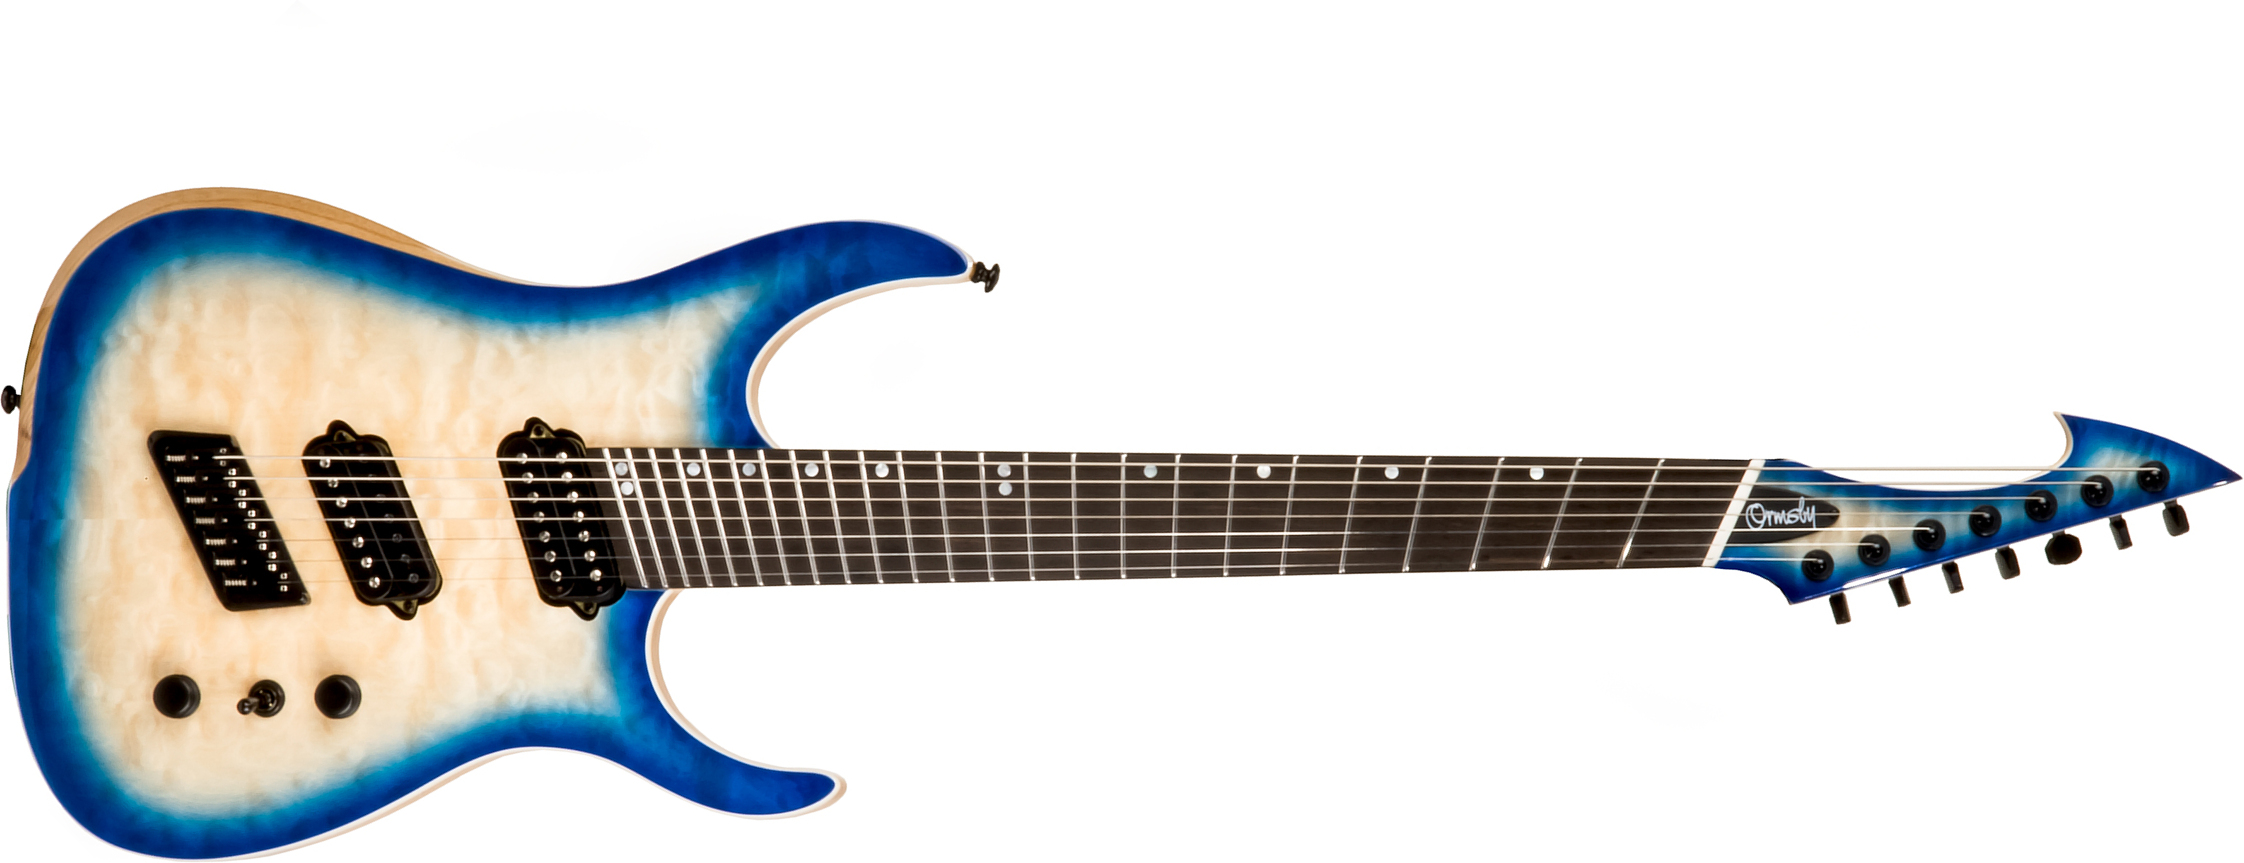 Ormsby Tx Gtr 7 Swamp Ash Quilt Maple Hh Ht Eb - Azzurro Blue - Multi-scale gitaar - Main picture